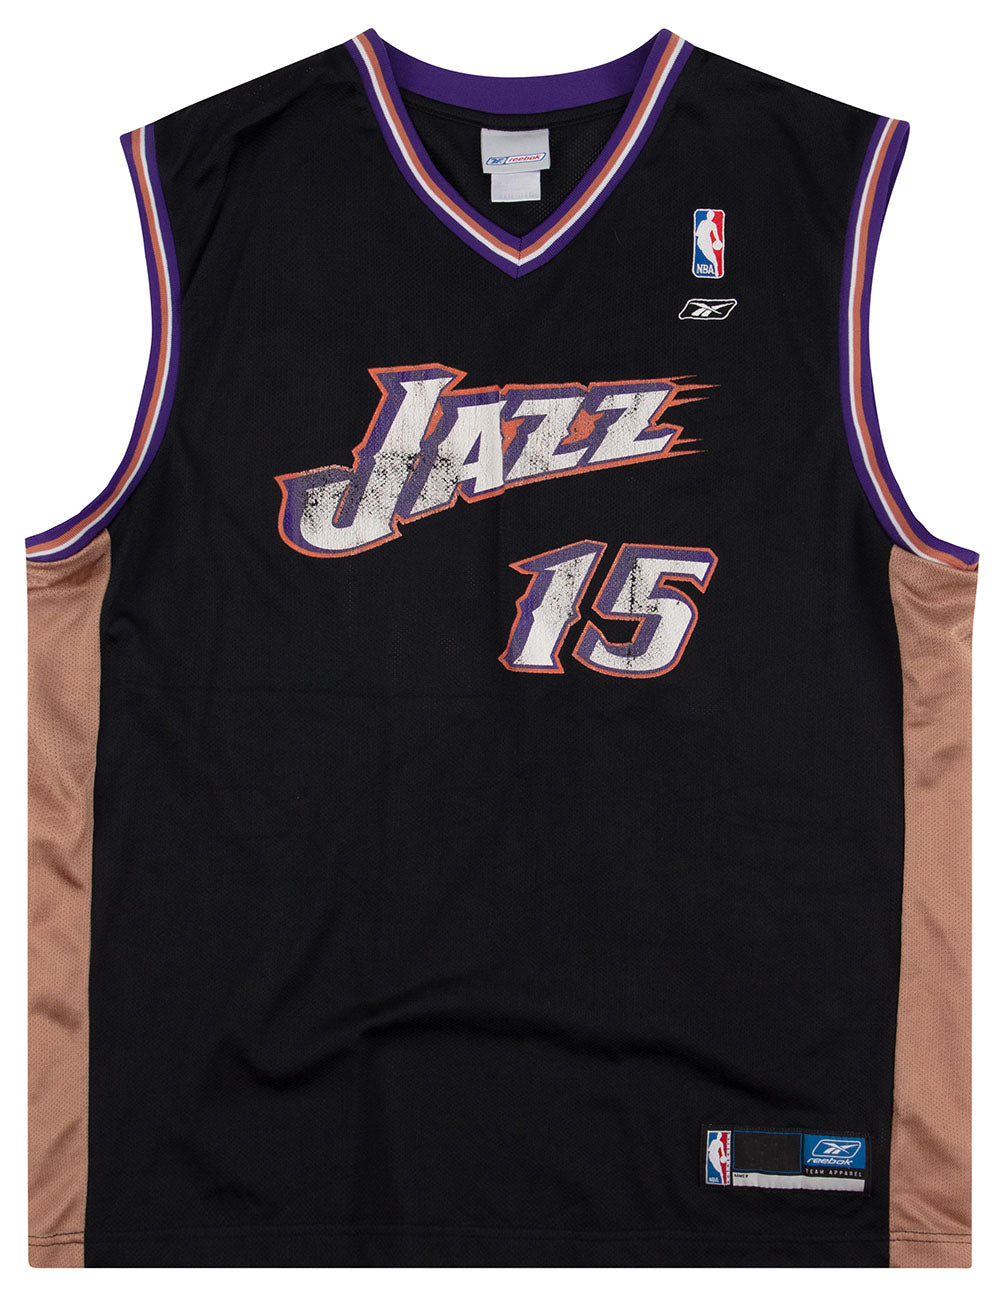 Utah Jazz Jerseys in Utah Jazz Team Shop